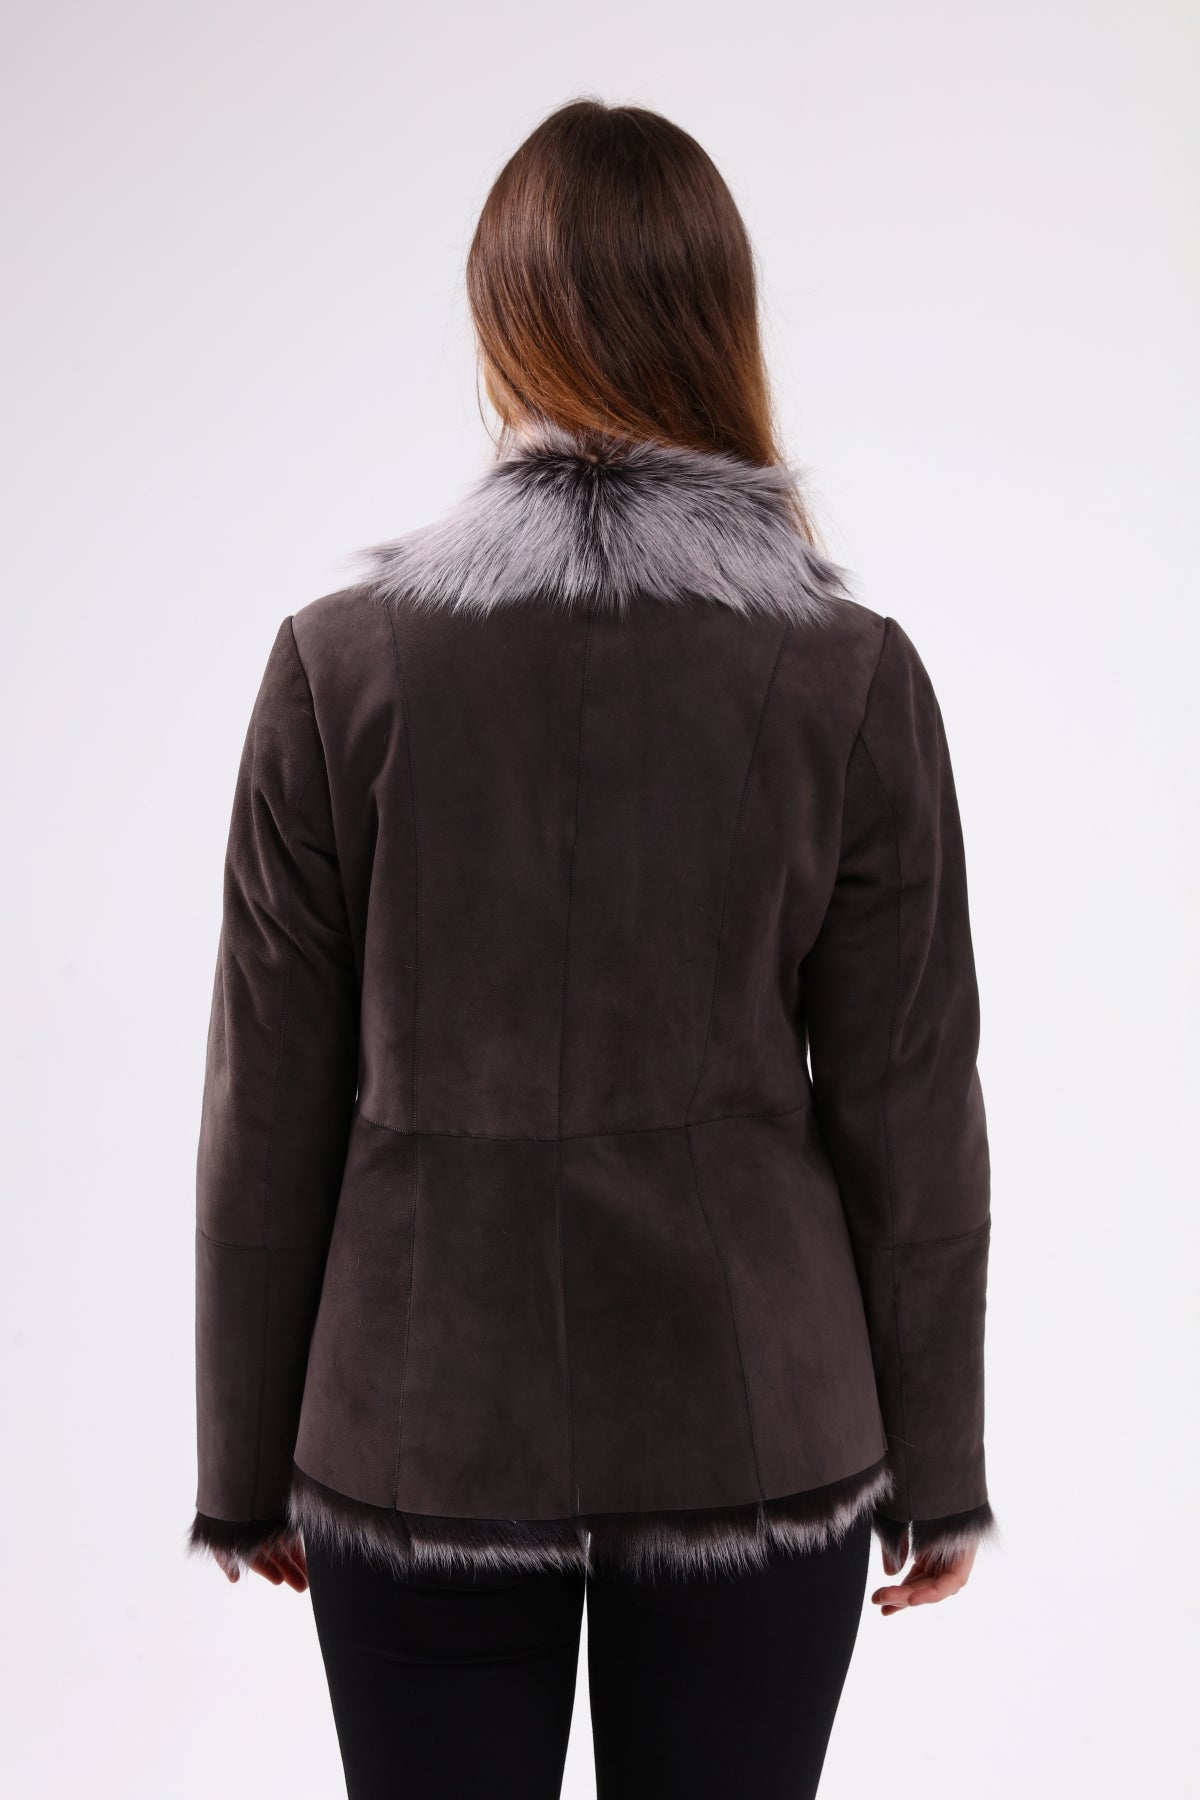 Gray Women's Suede Leather Coat